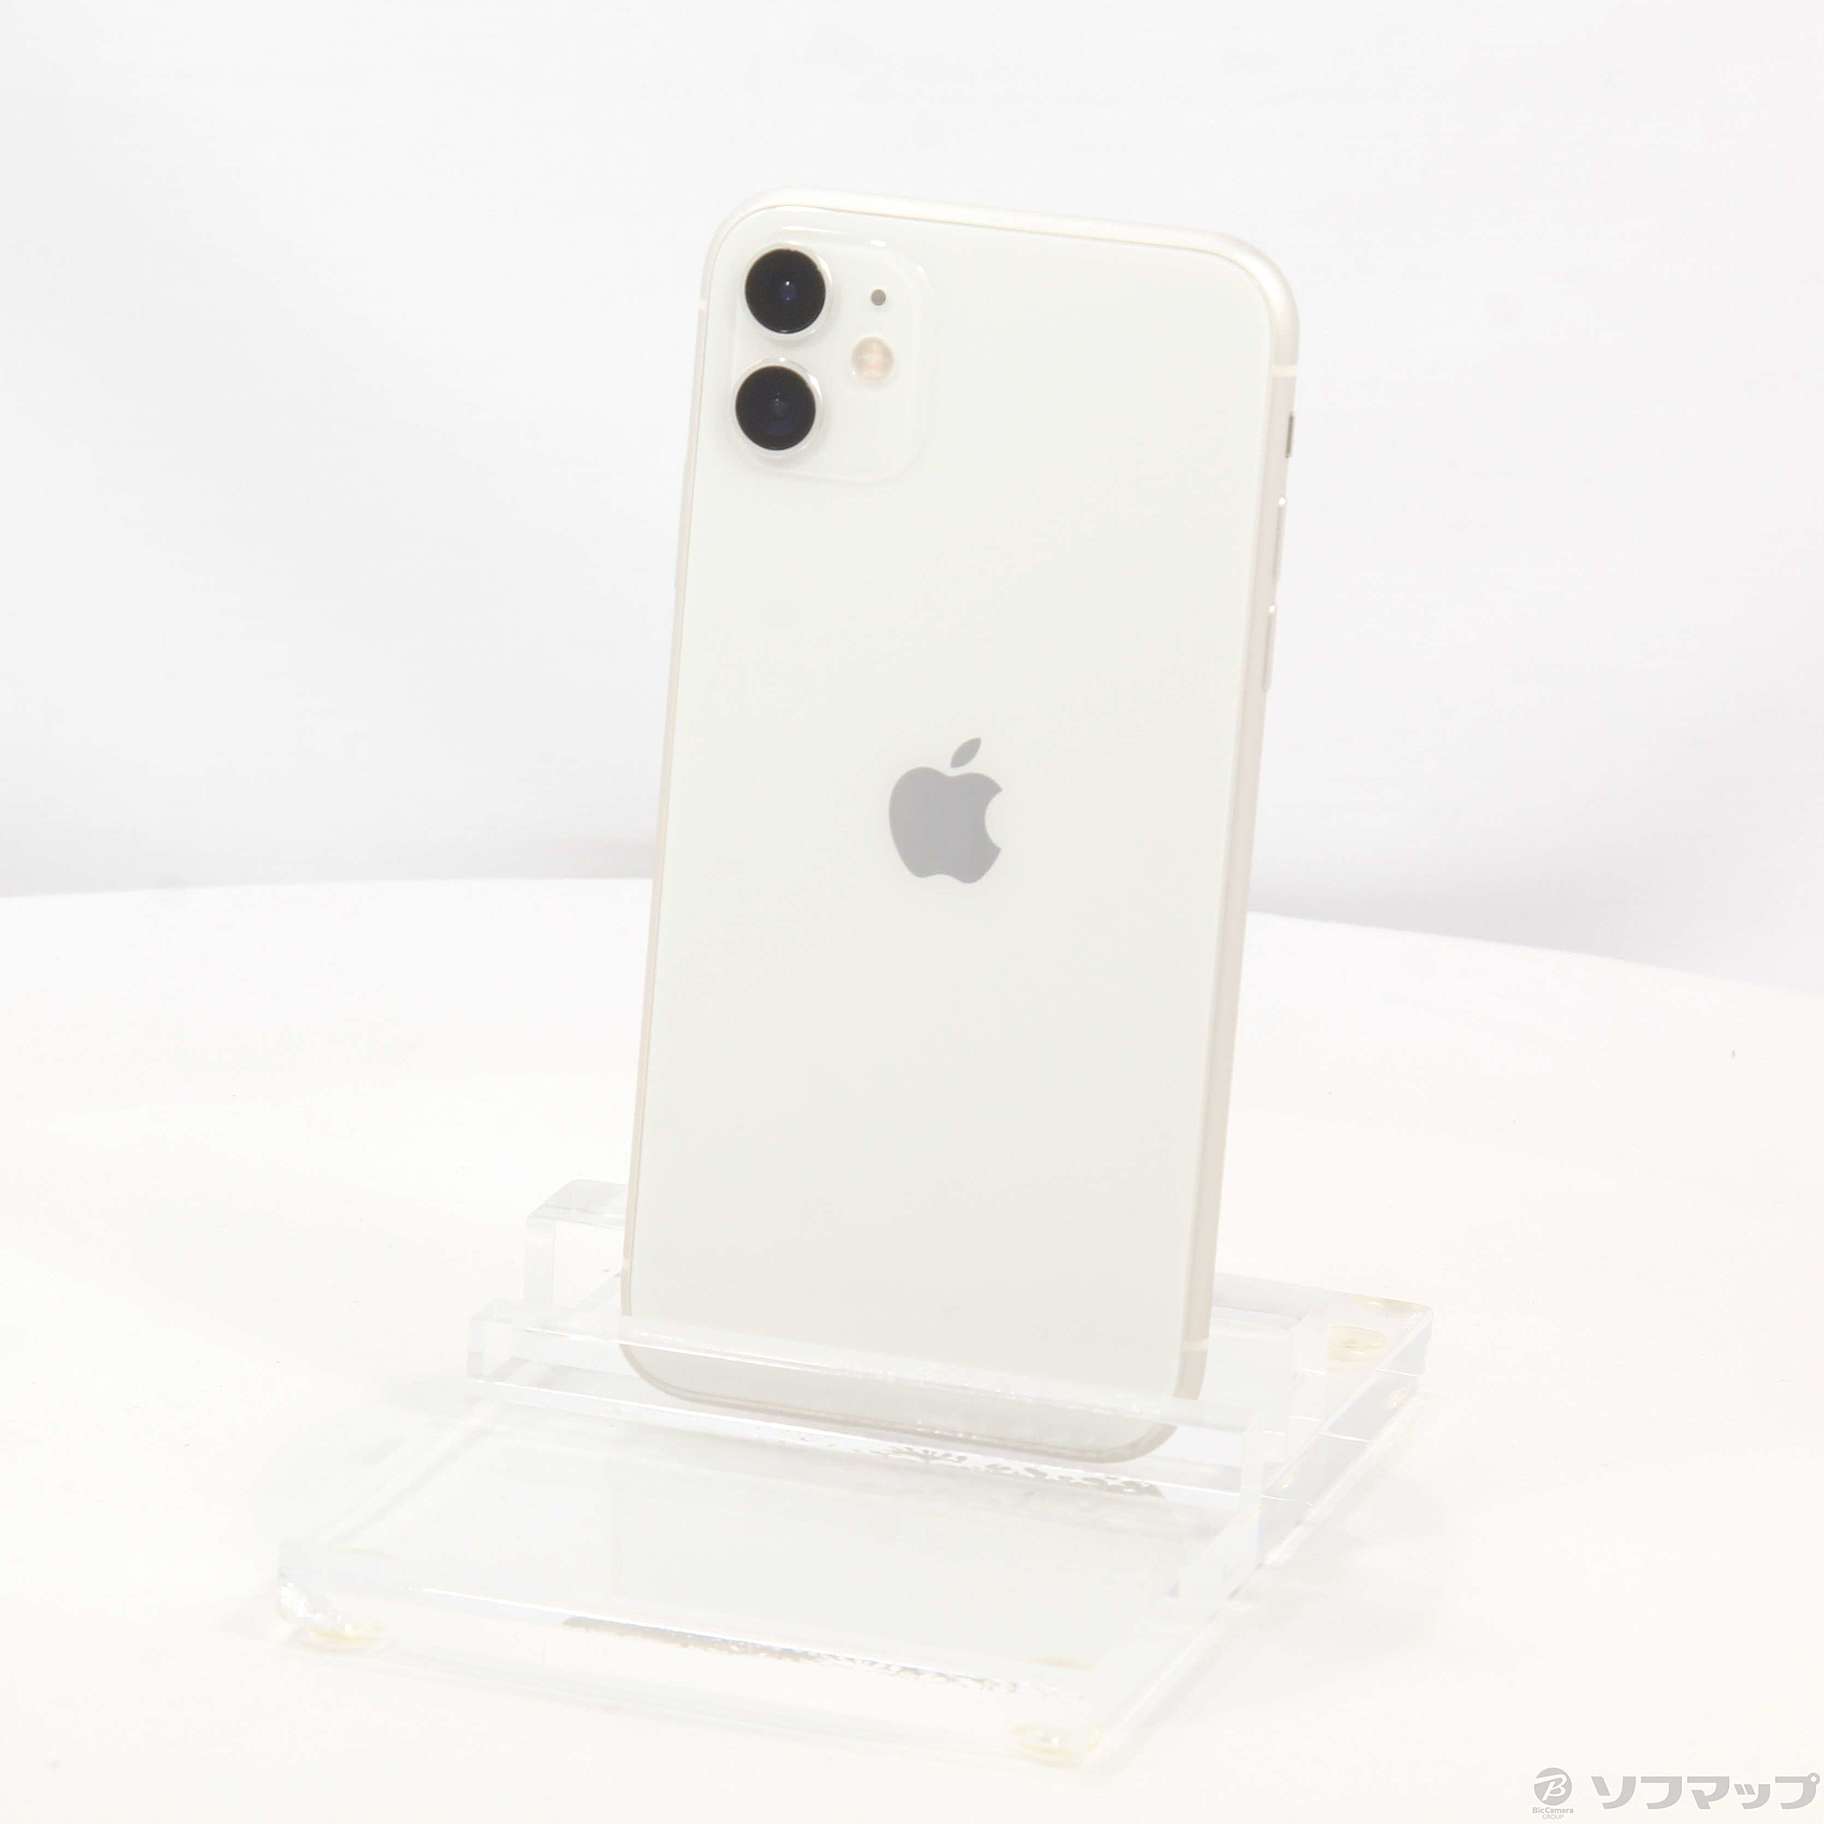 Apple iPhone 11 64GB SIMフリー MWLT2J/A